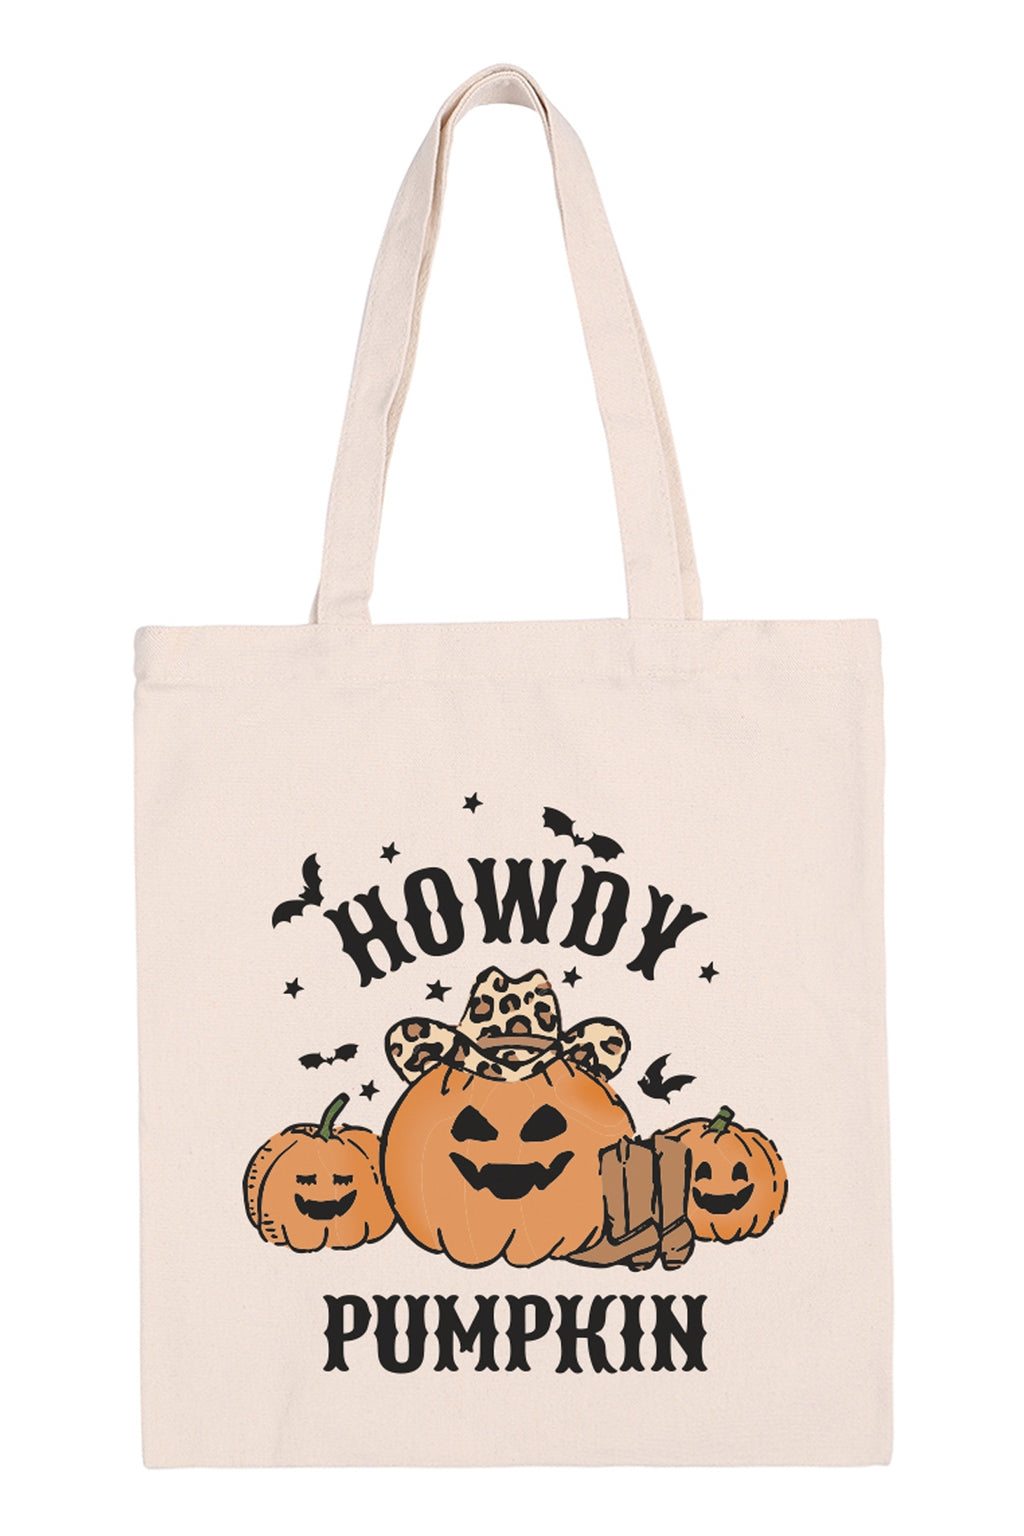 Howdy Pumpkin Print Tote Bag - Pack of 6